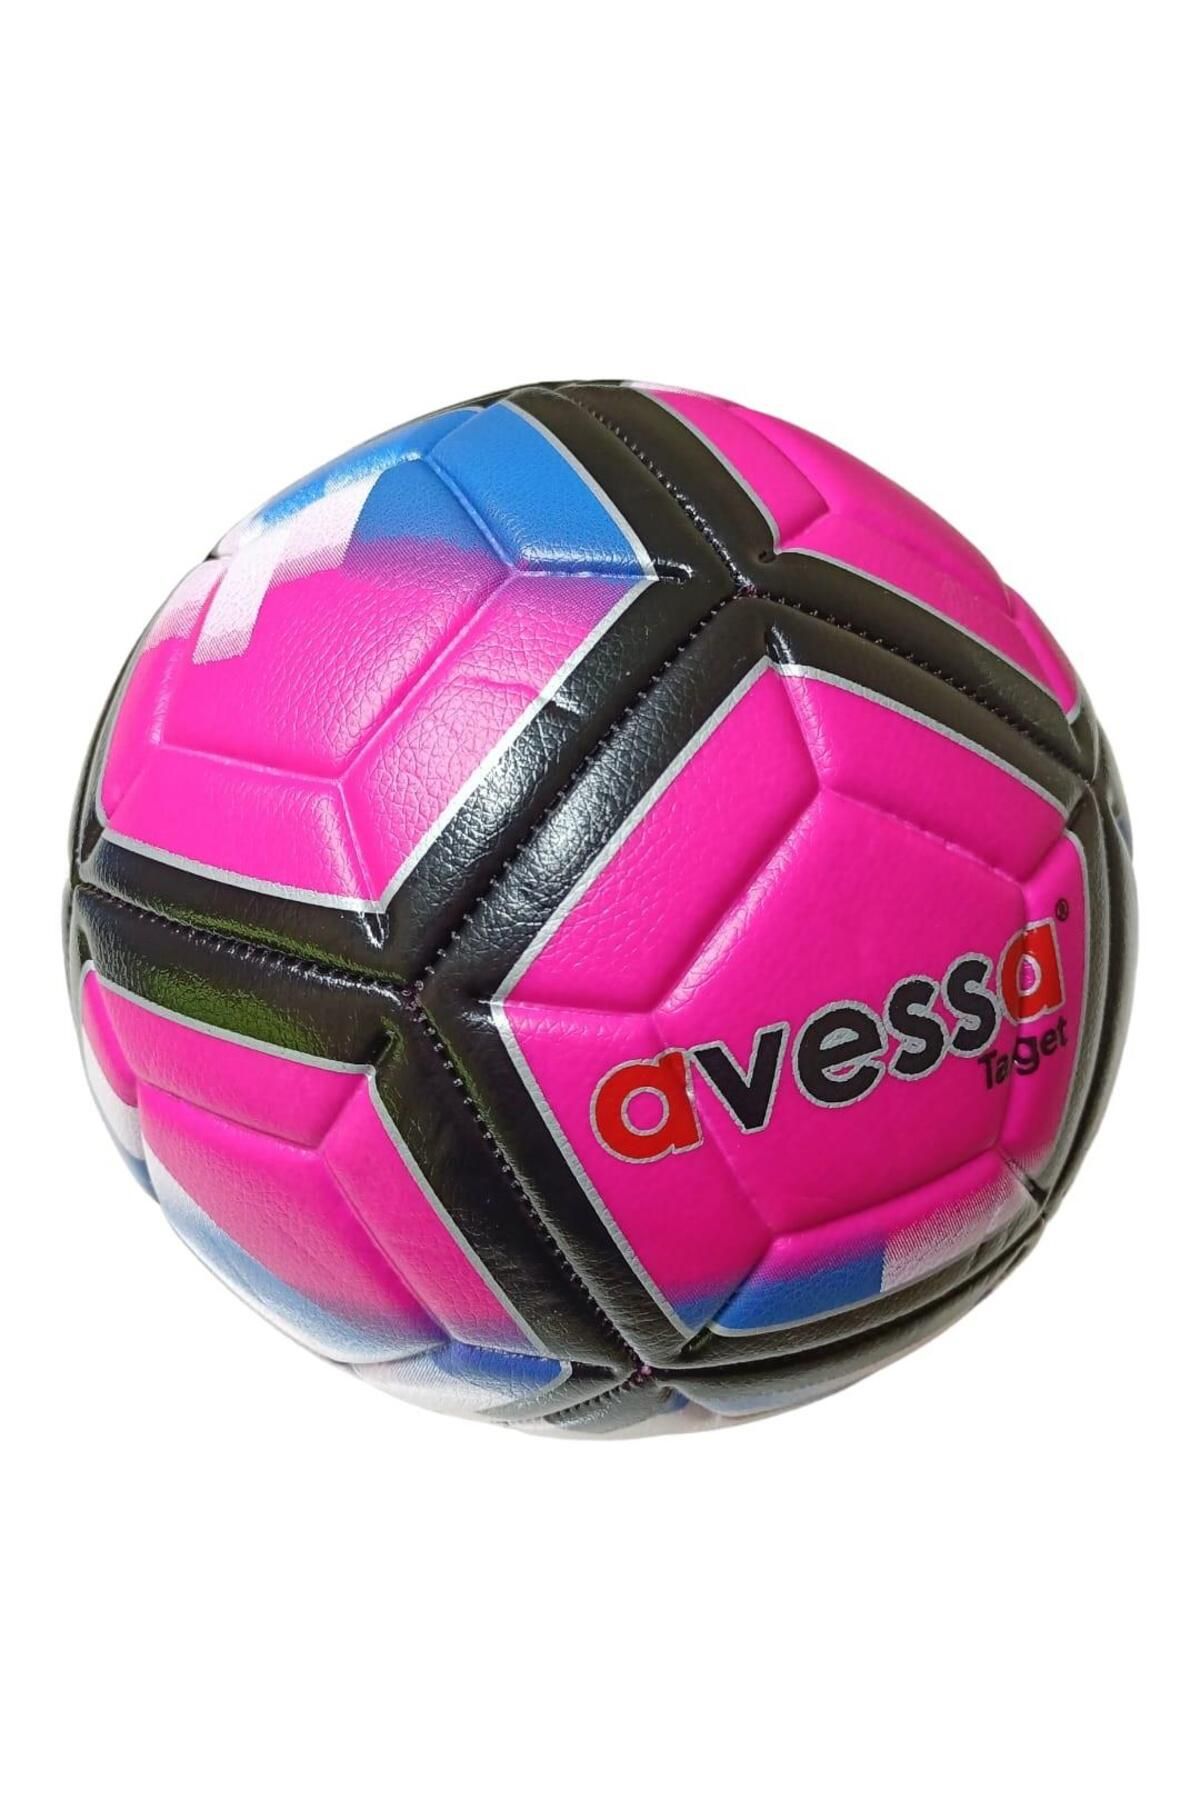 Avessa Ft-200e Futbol Topu 4 Astar 410-420 gr